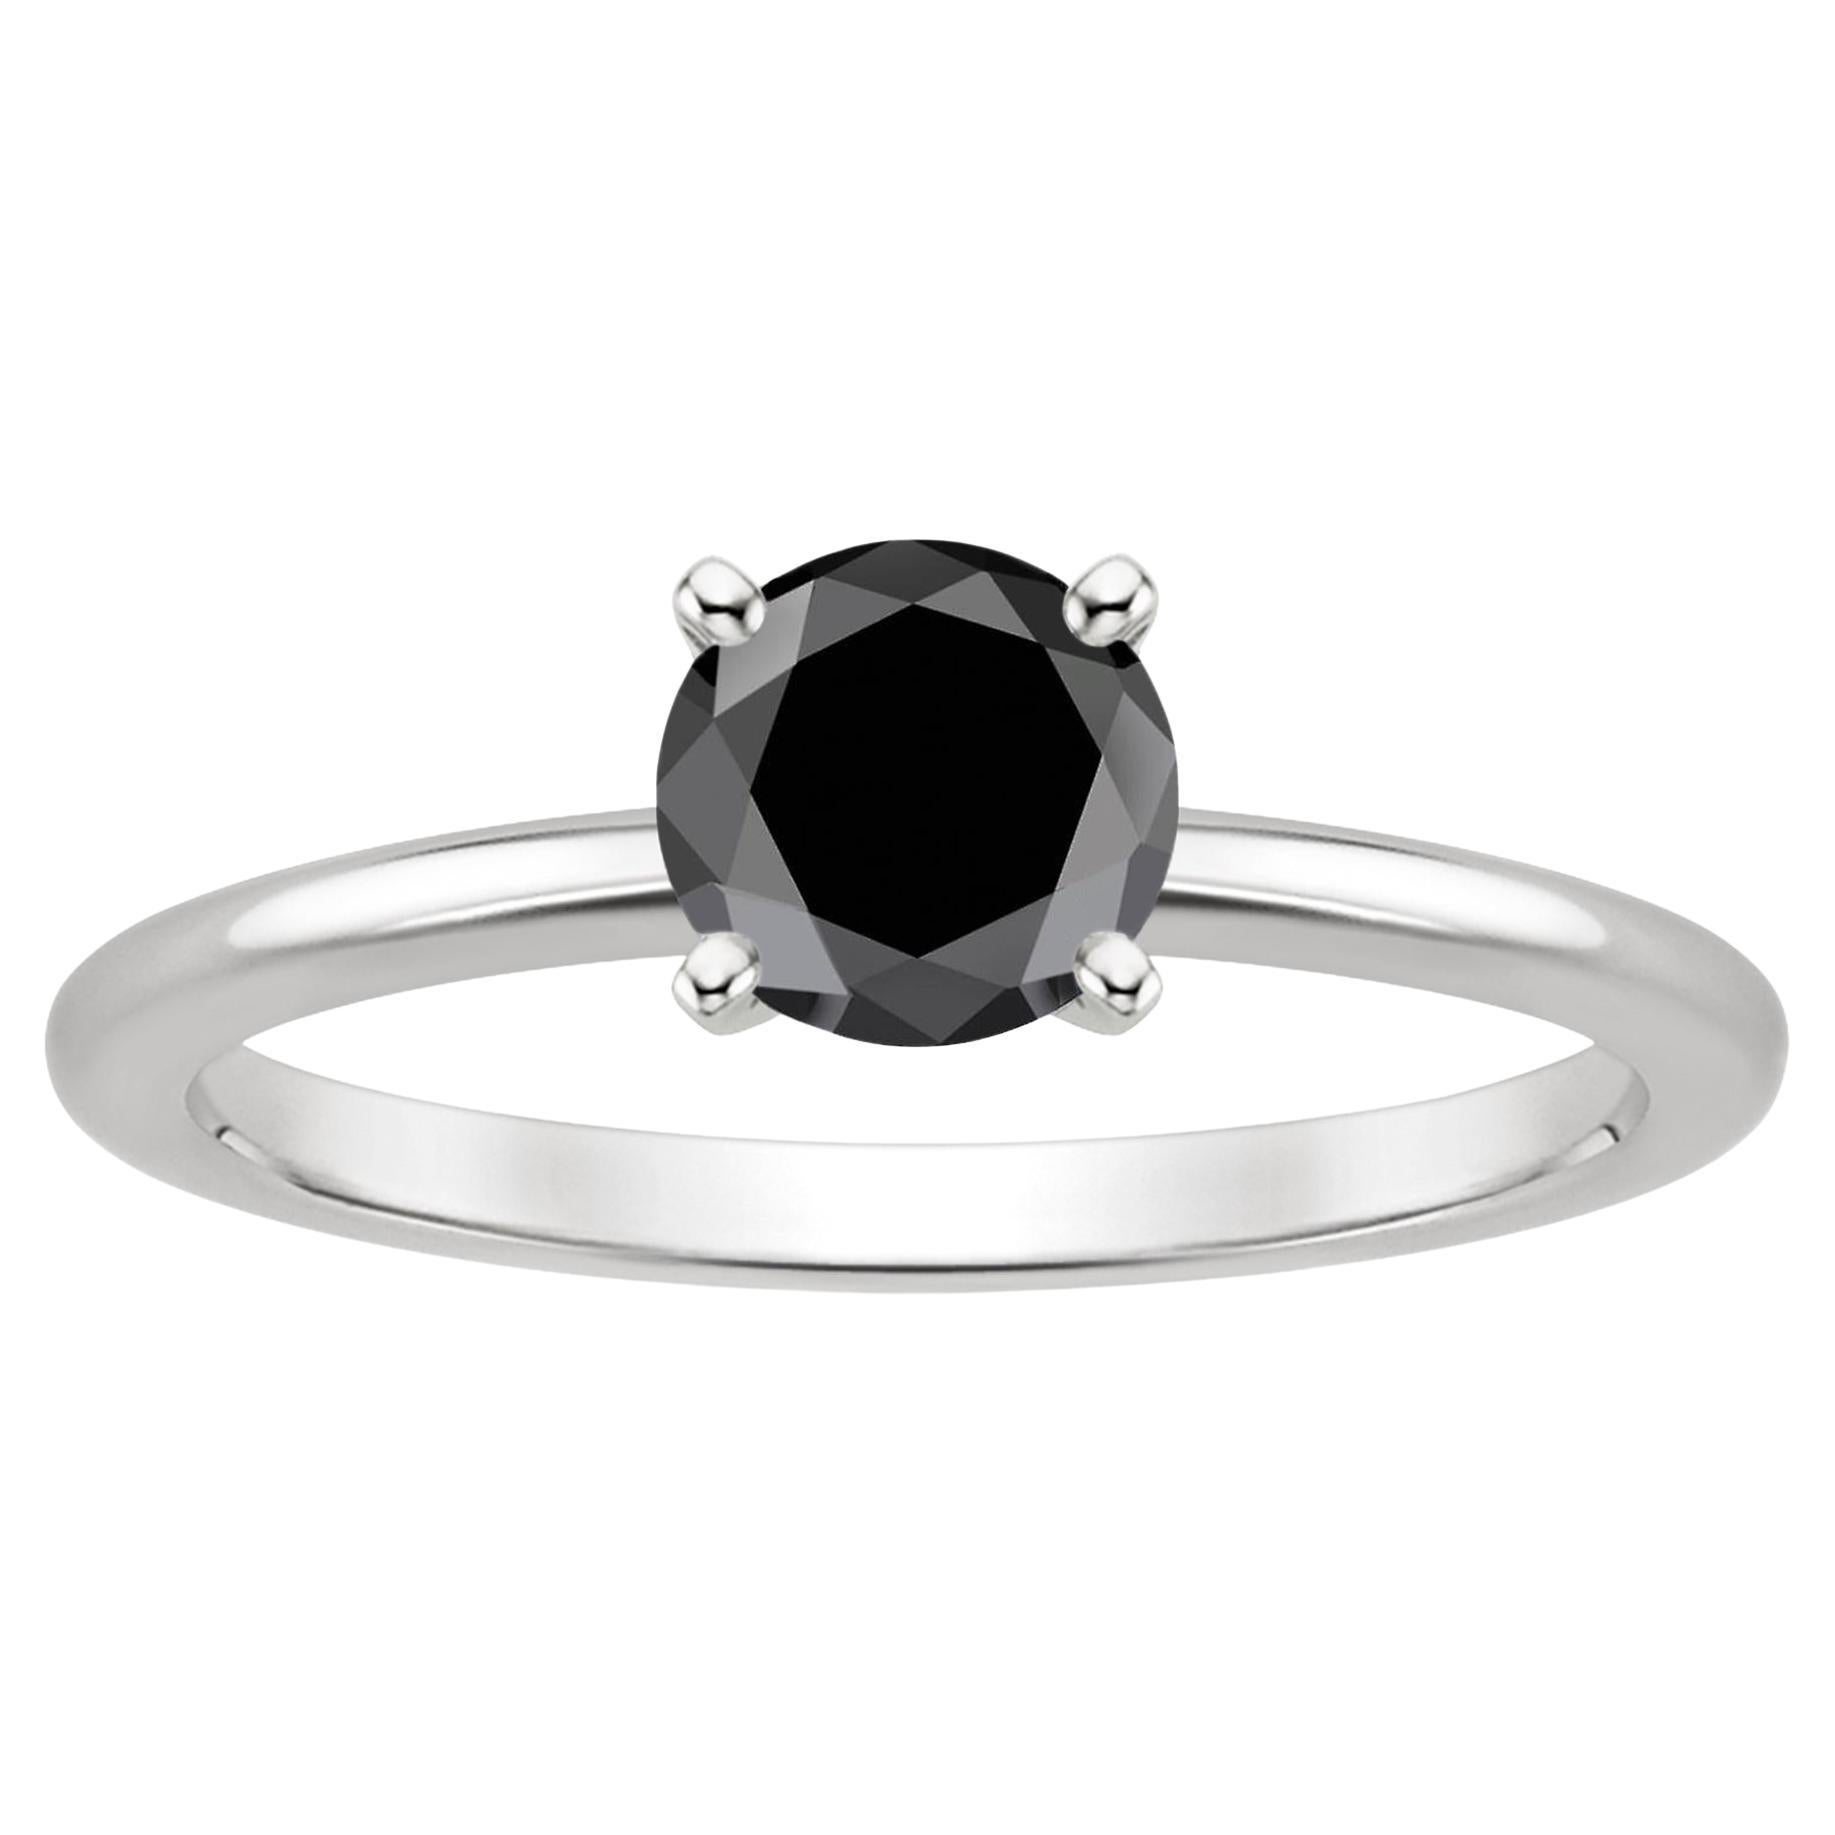 3.03 Carat Round Black Diamond Solitaire Ring in 14K White Gold